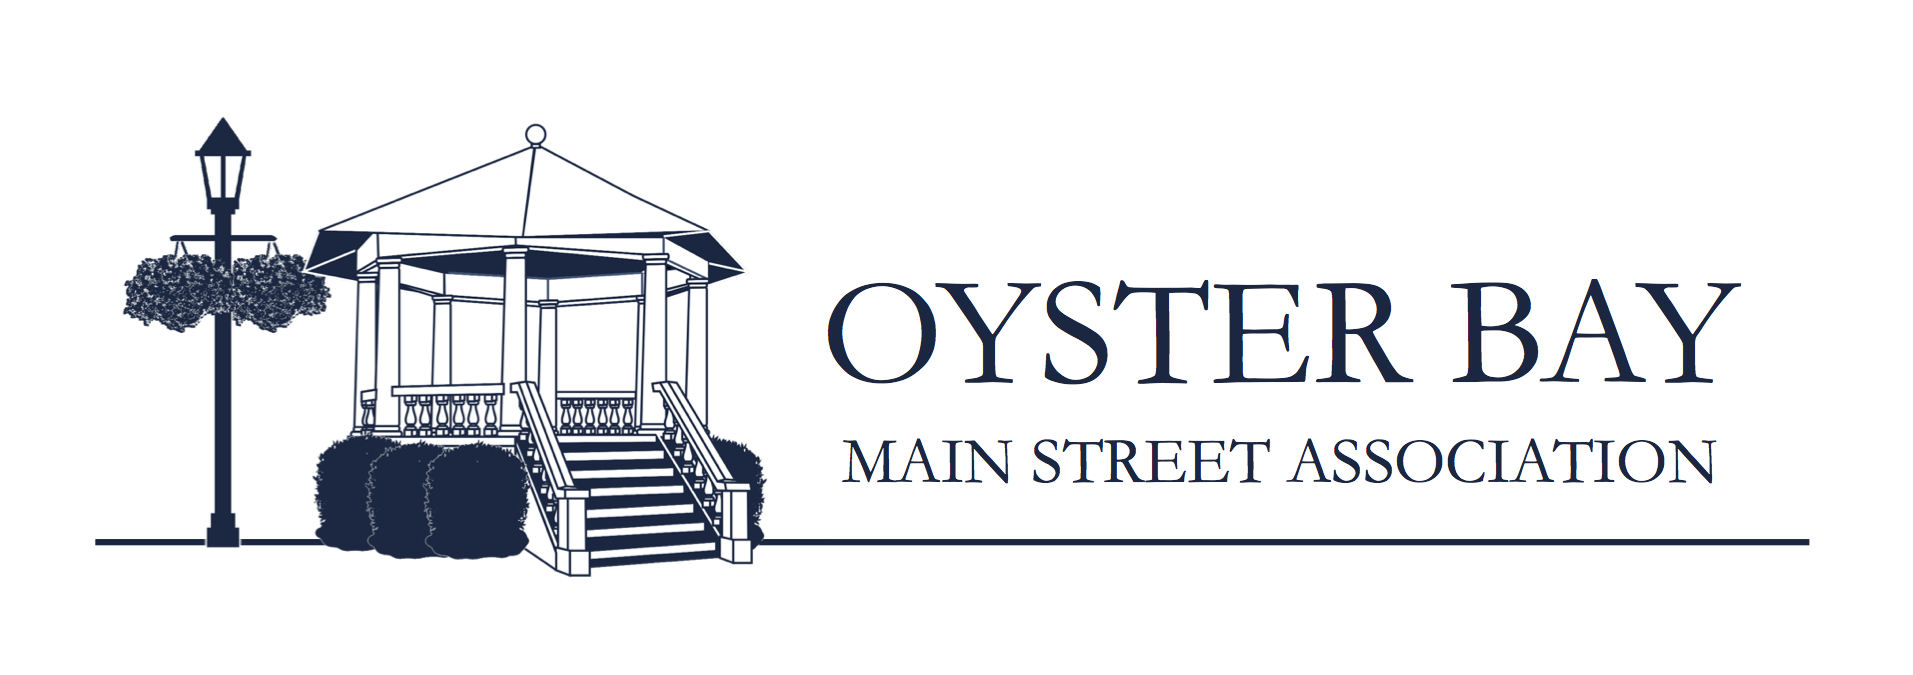 Oyster Bay Main Street Association logo